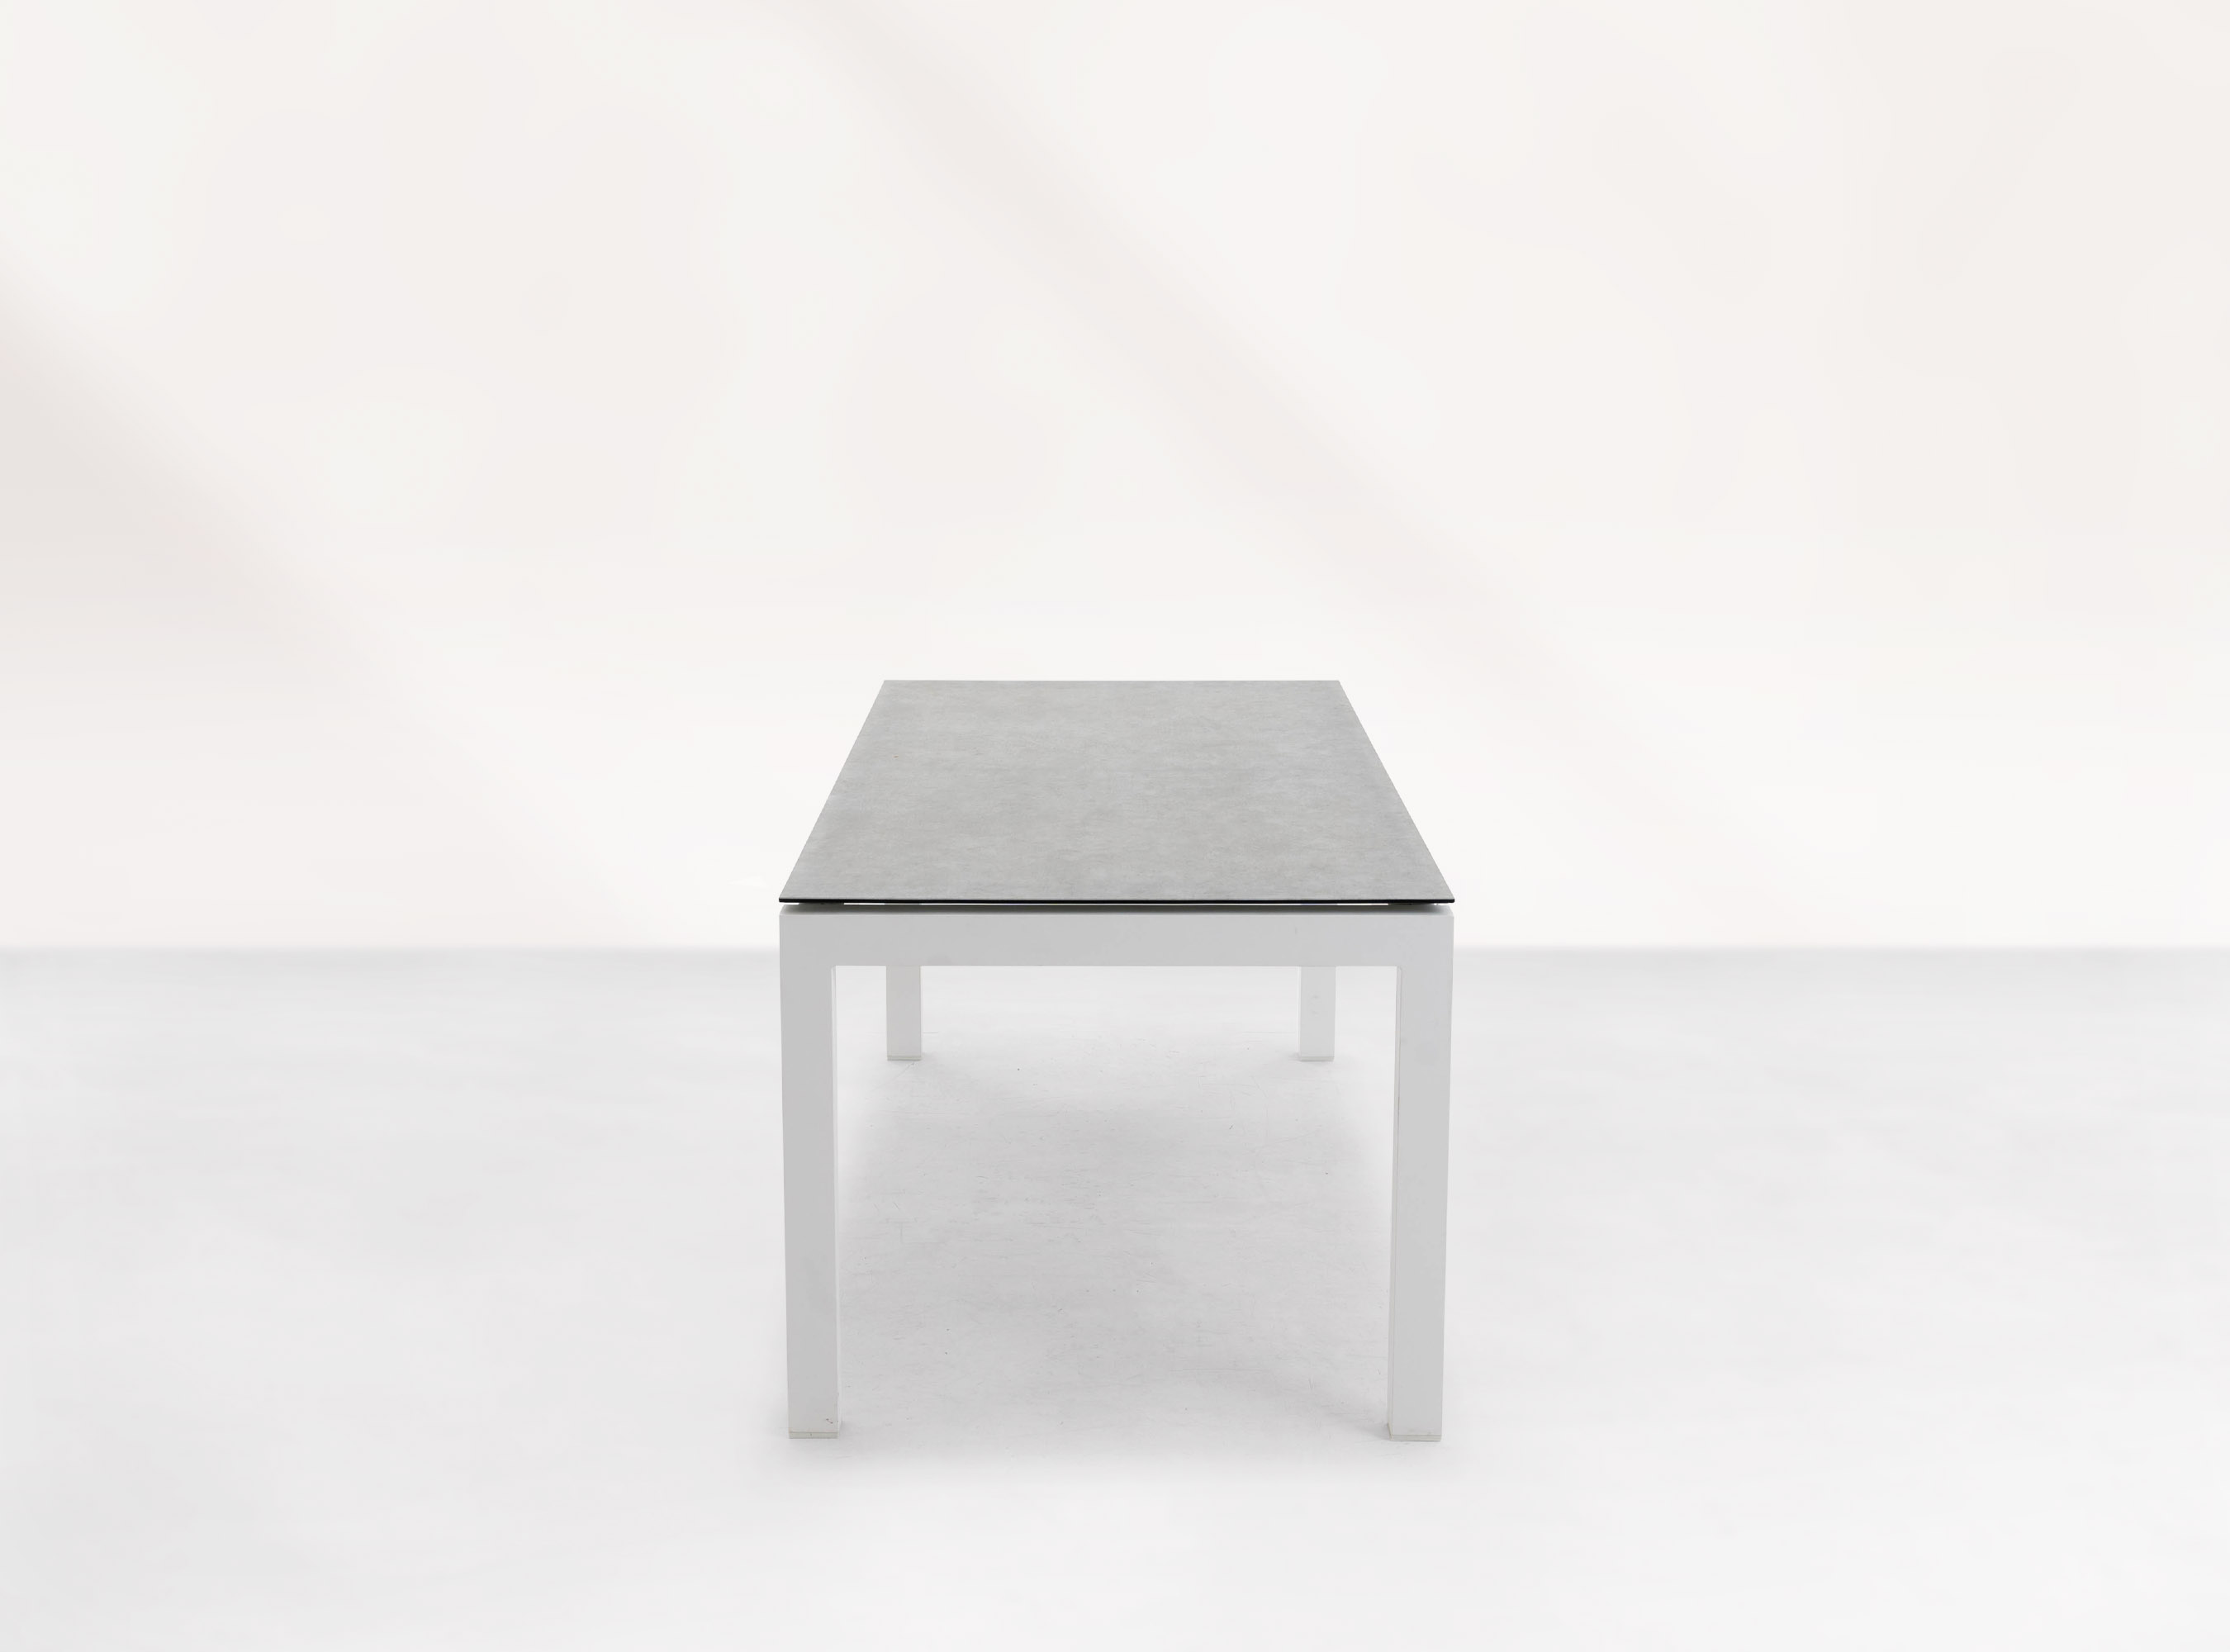 life Long island ausziehbarer Tisch weiß/Keramik betonoptik 210/60x90